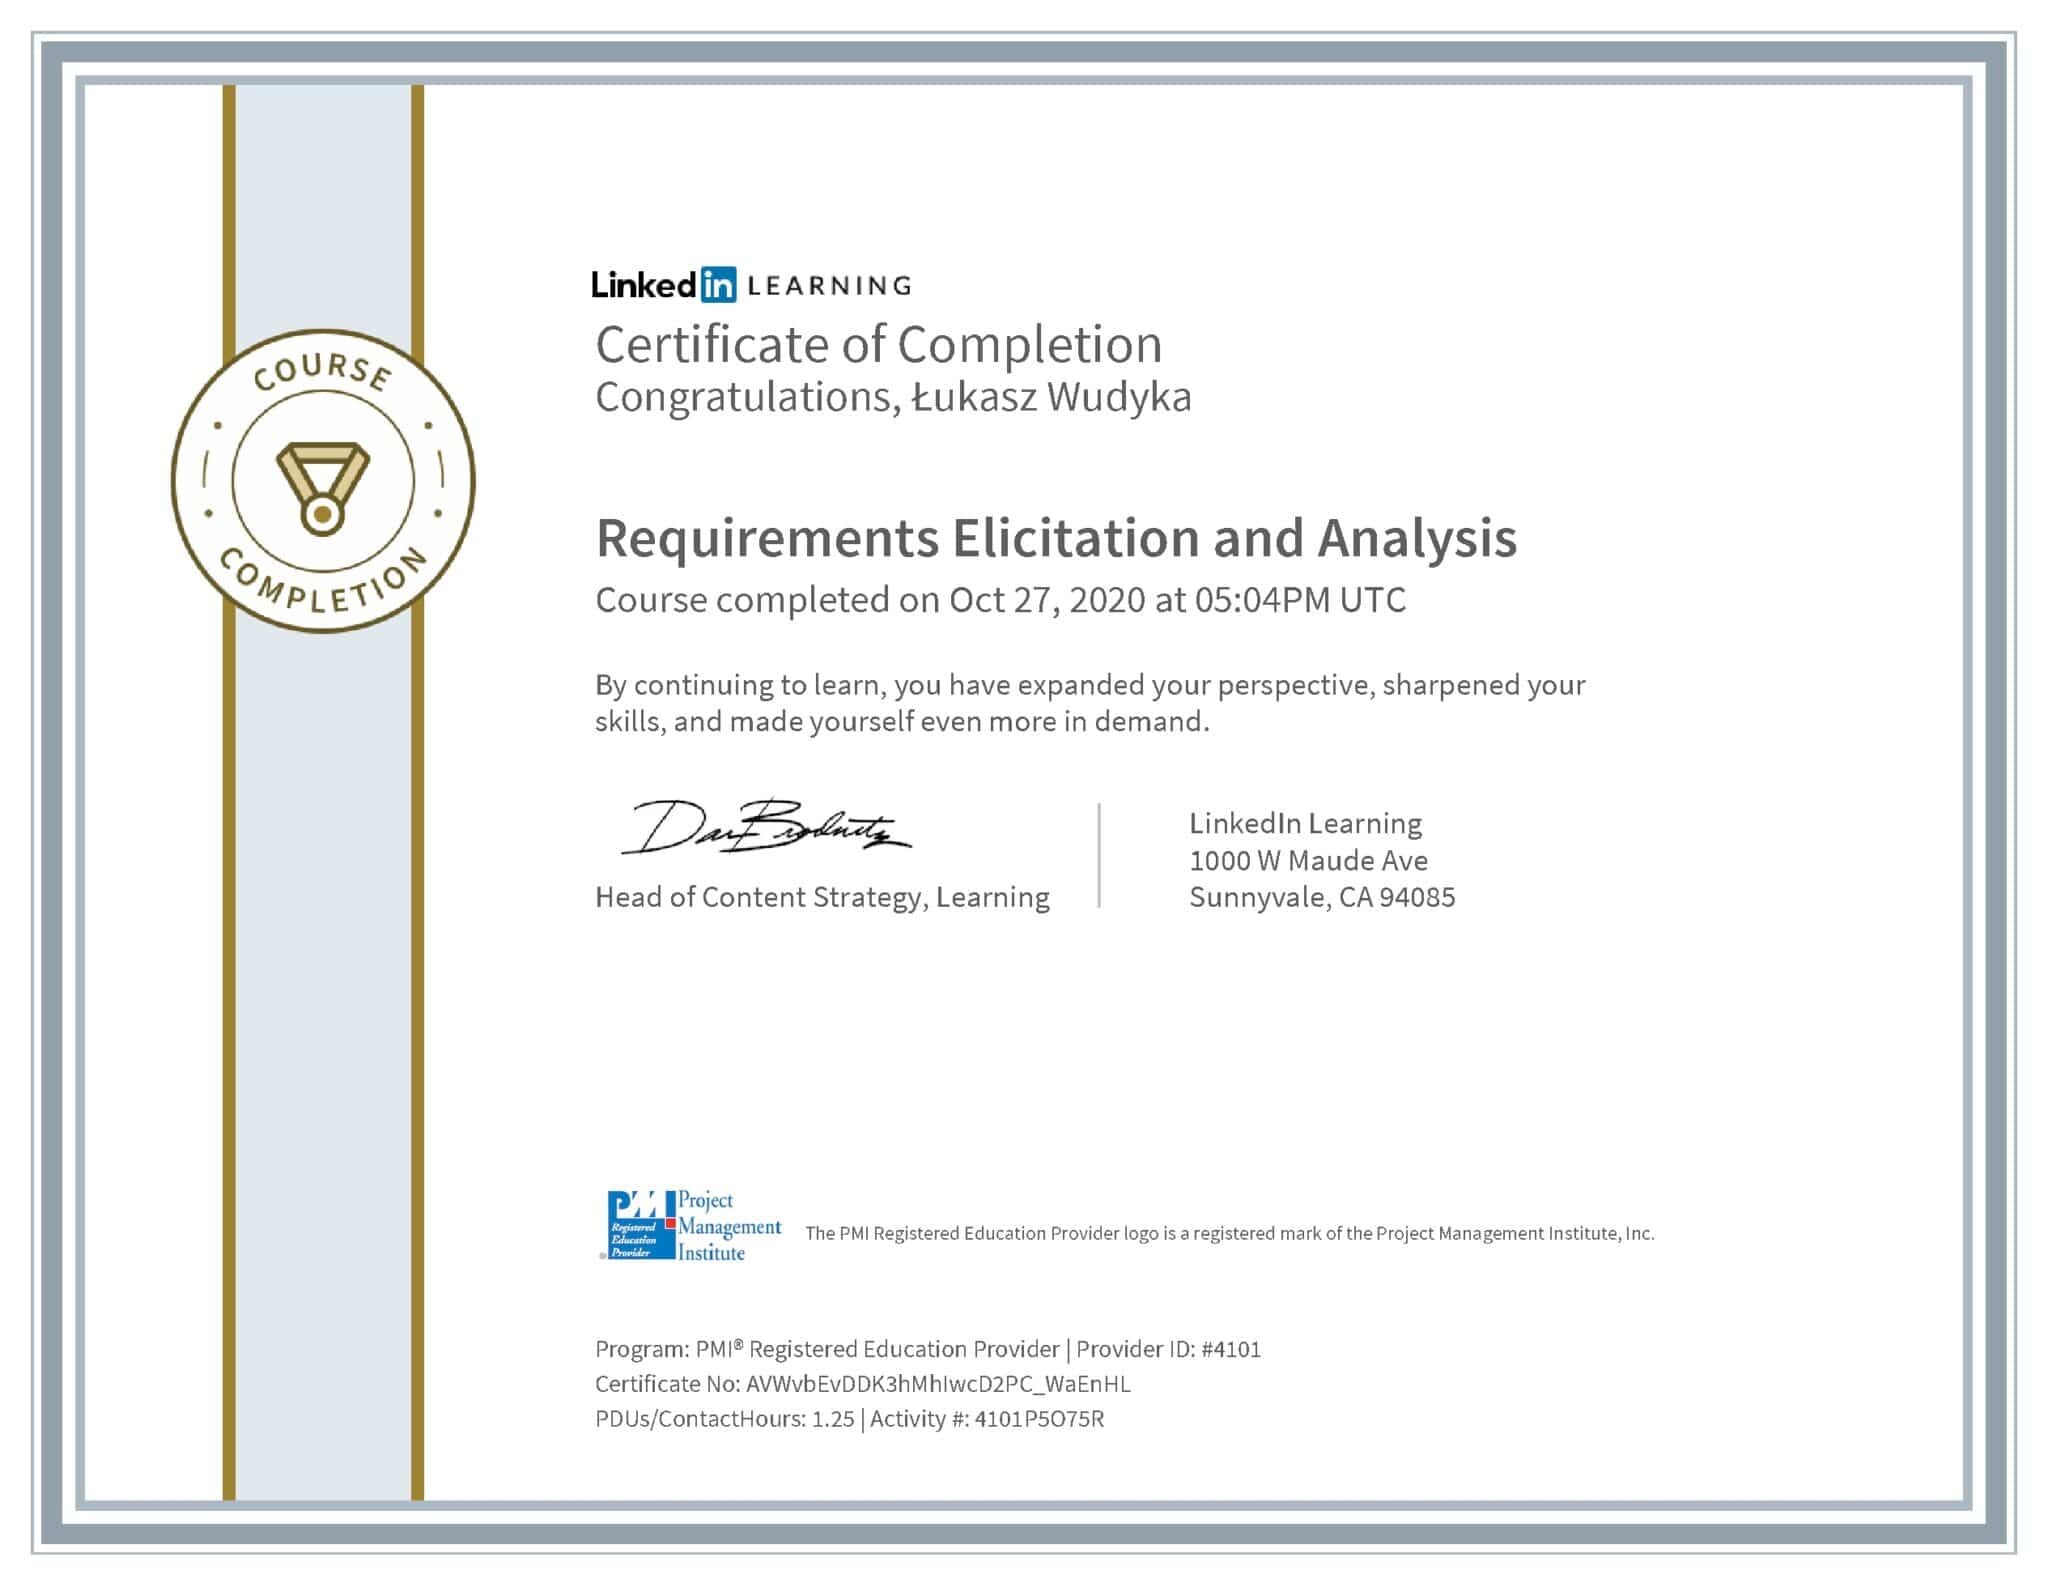 Łukasz Wudyka certyfikat LinkedIn Requirements Elicitation and Analysis PMI